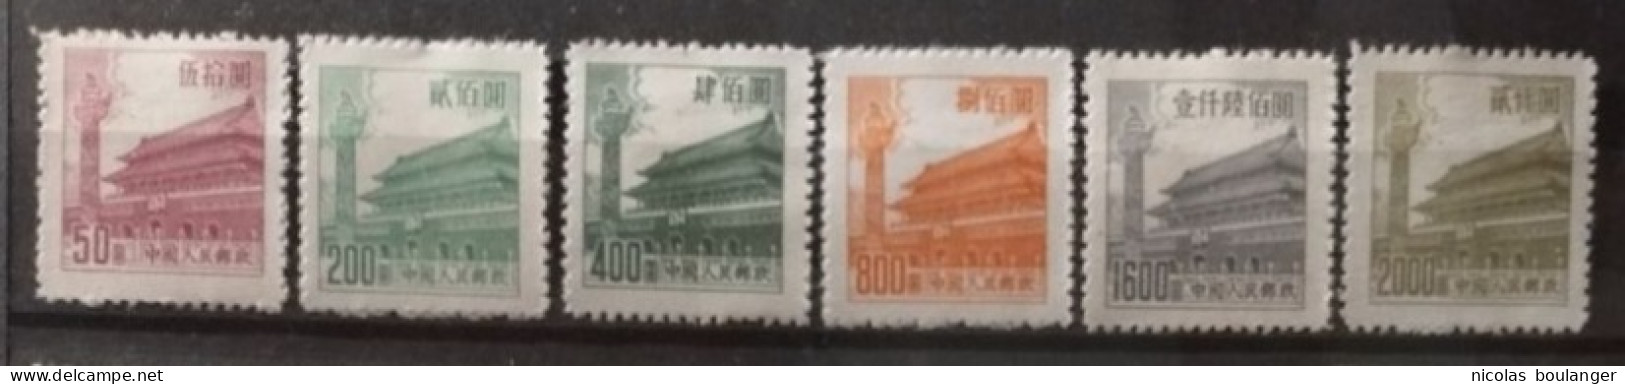 Chine 1954 / Yvert N°1008-1015 / * (sans Gomme) - Nuovi